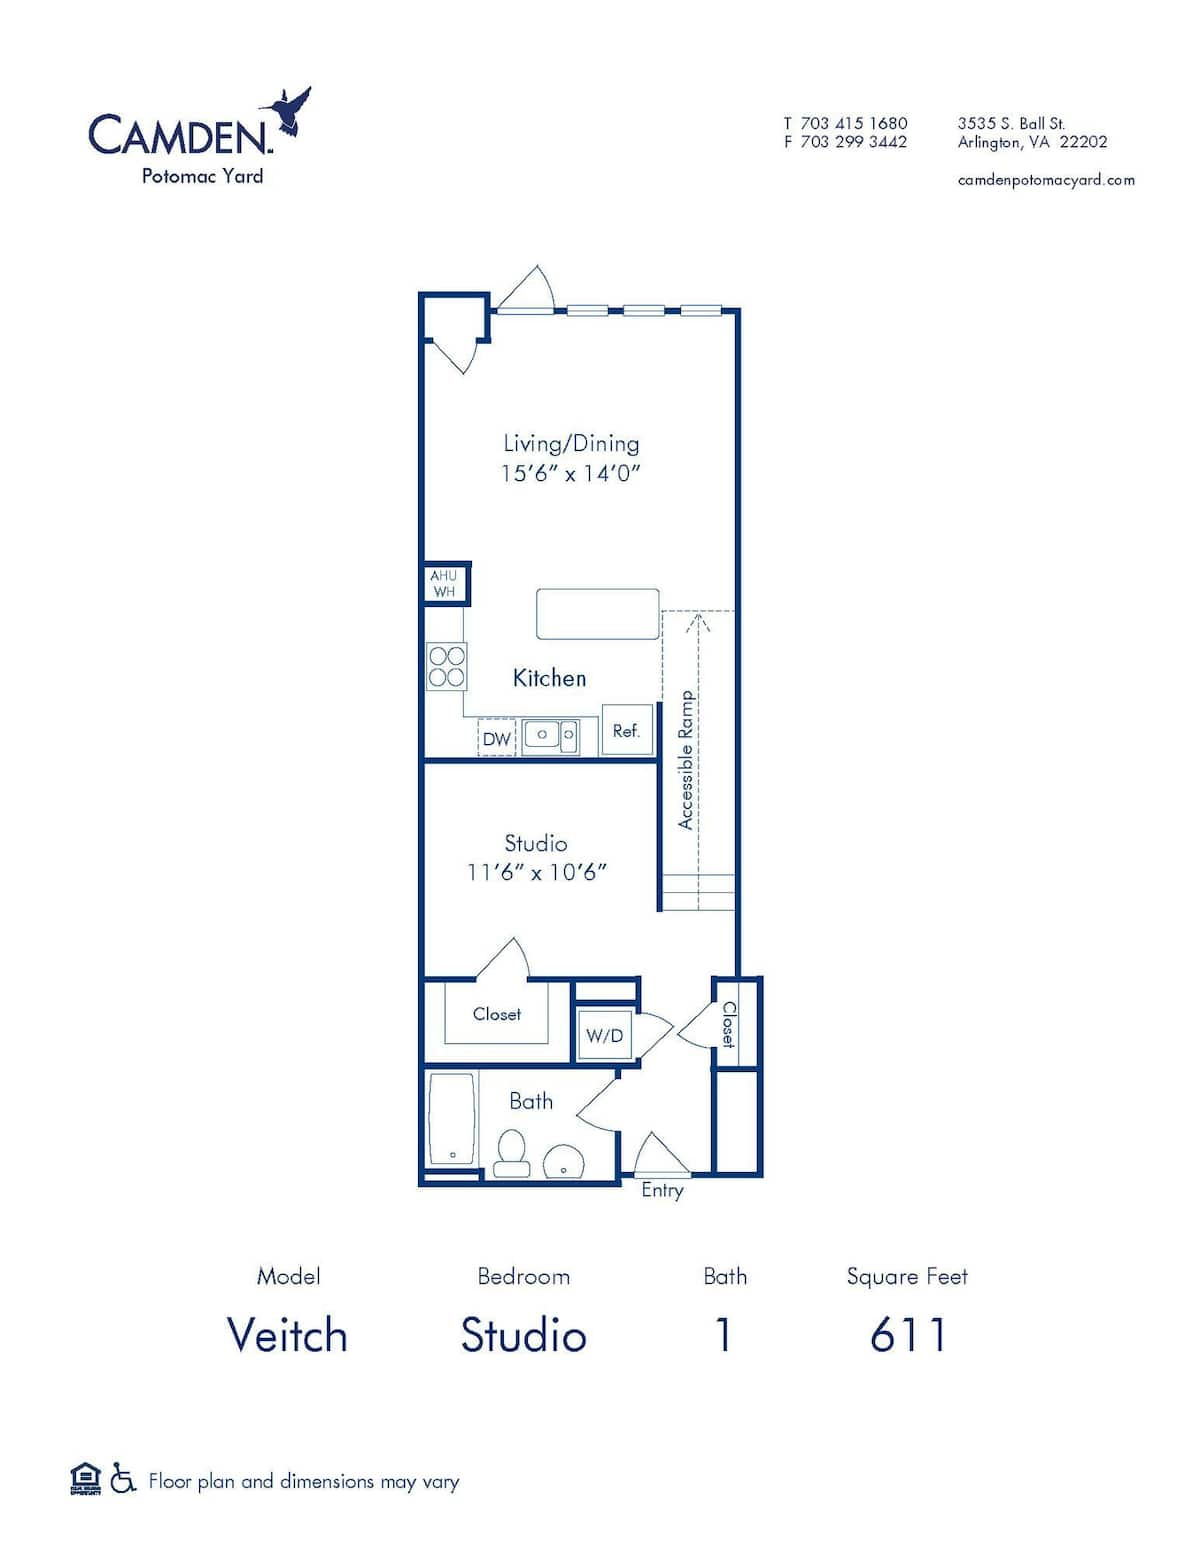 Floorplan diagram for Veitch, showing Studio